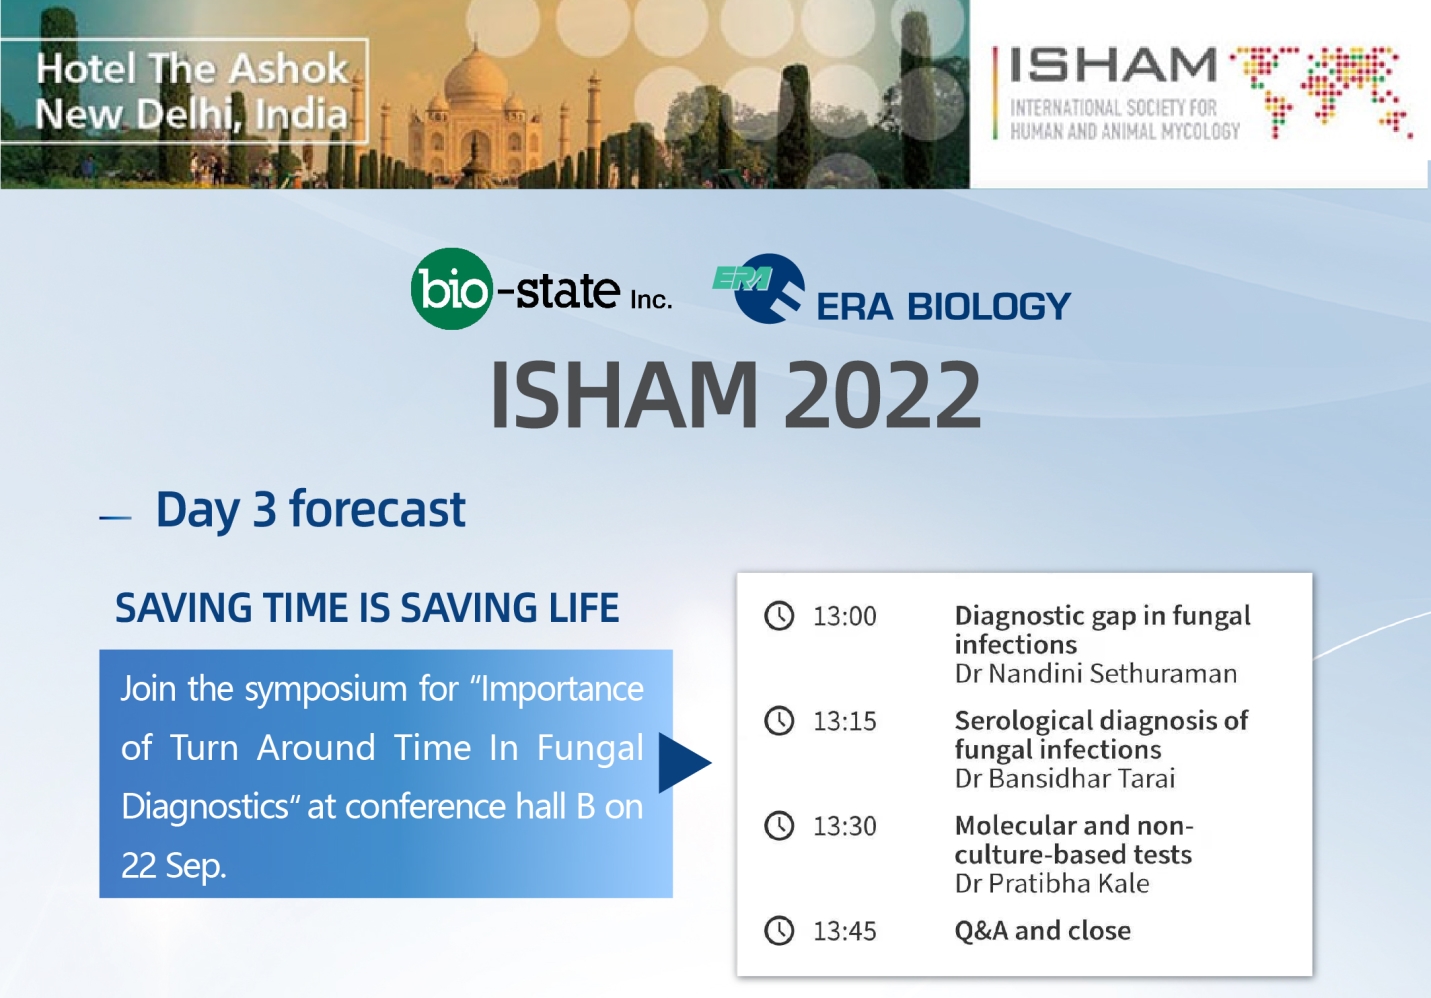 Day 3 Forecast for ISHAM 2022